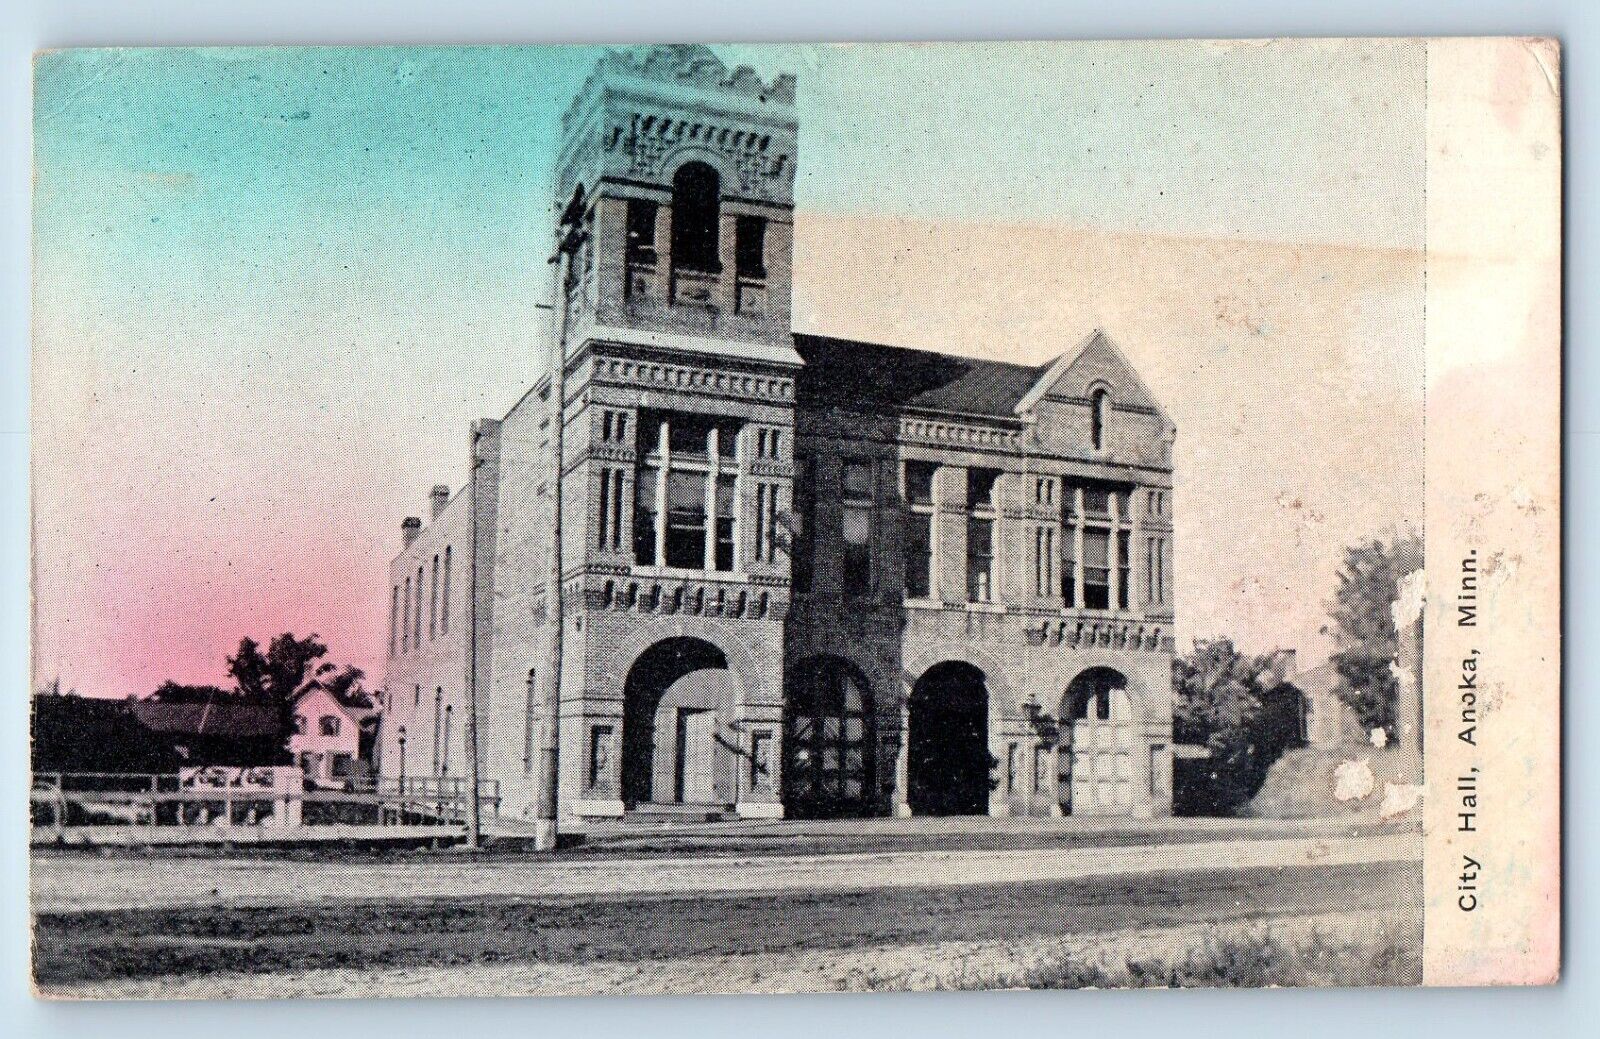 Anoka Minnesota Postcard City Hall Exterior Building View c1910 Vintage Antique